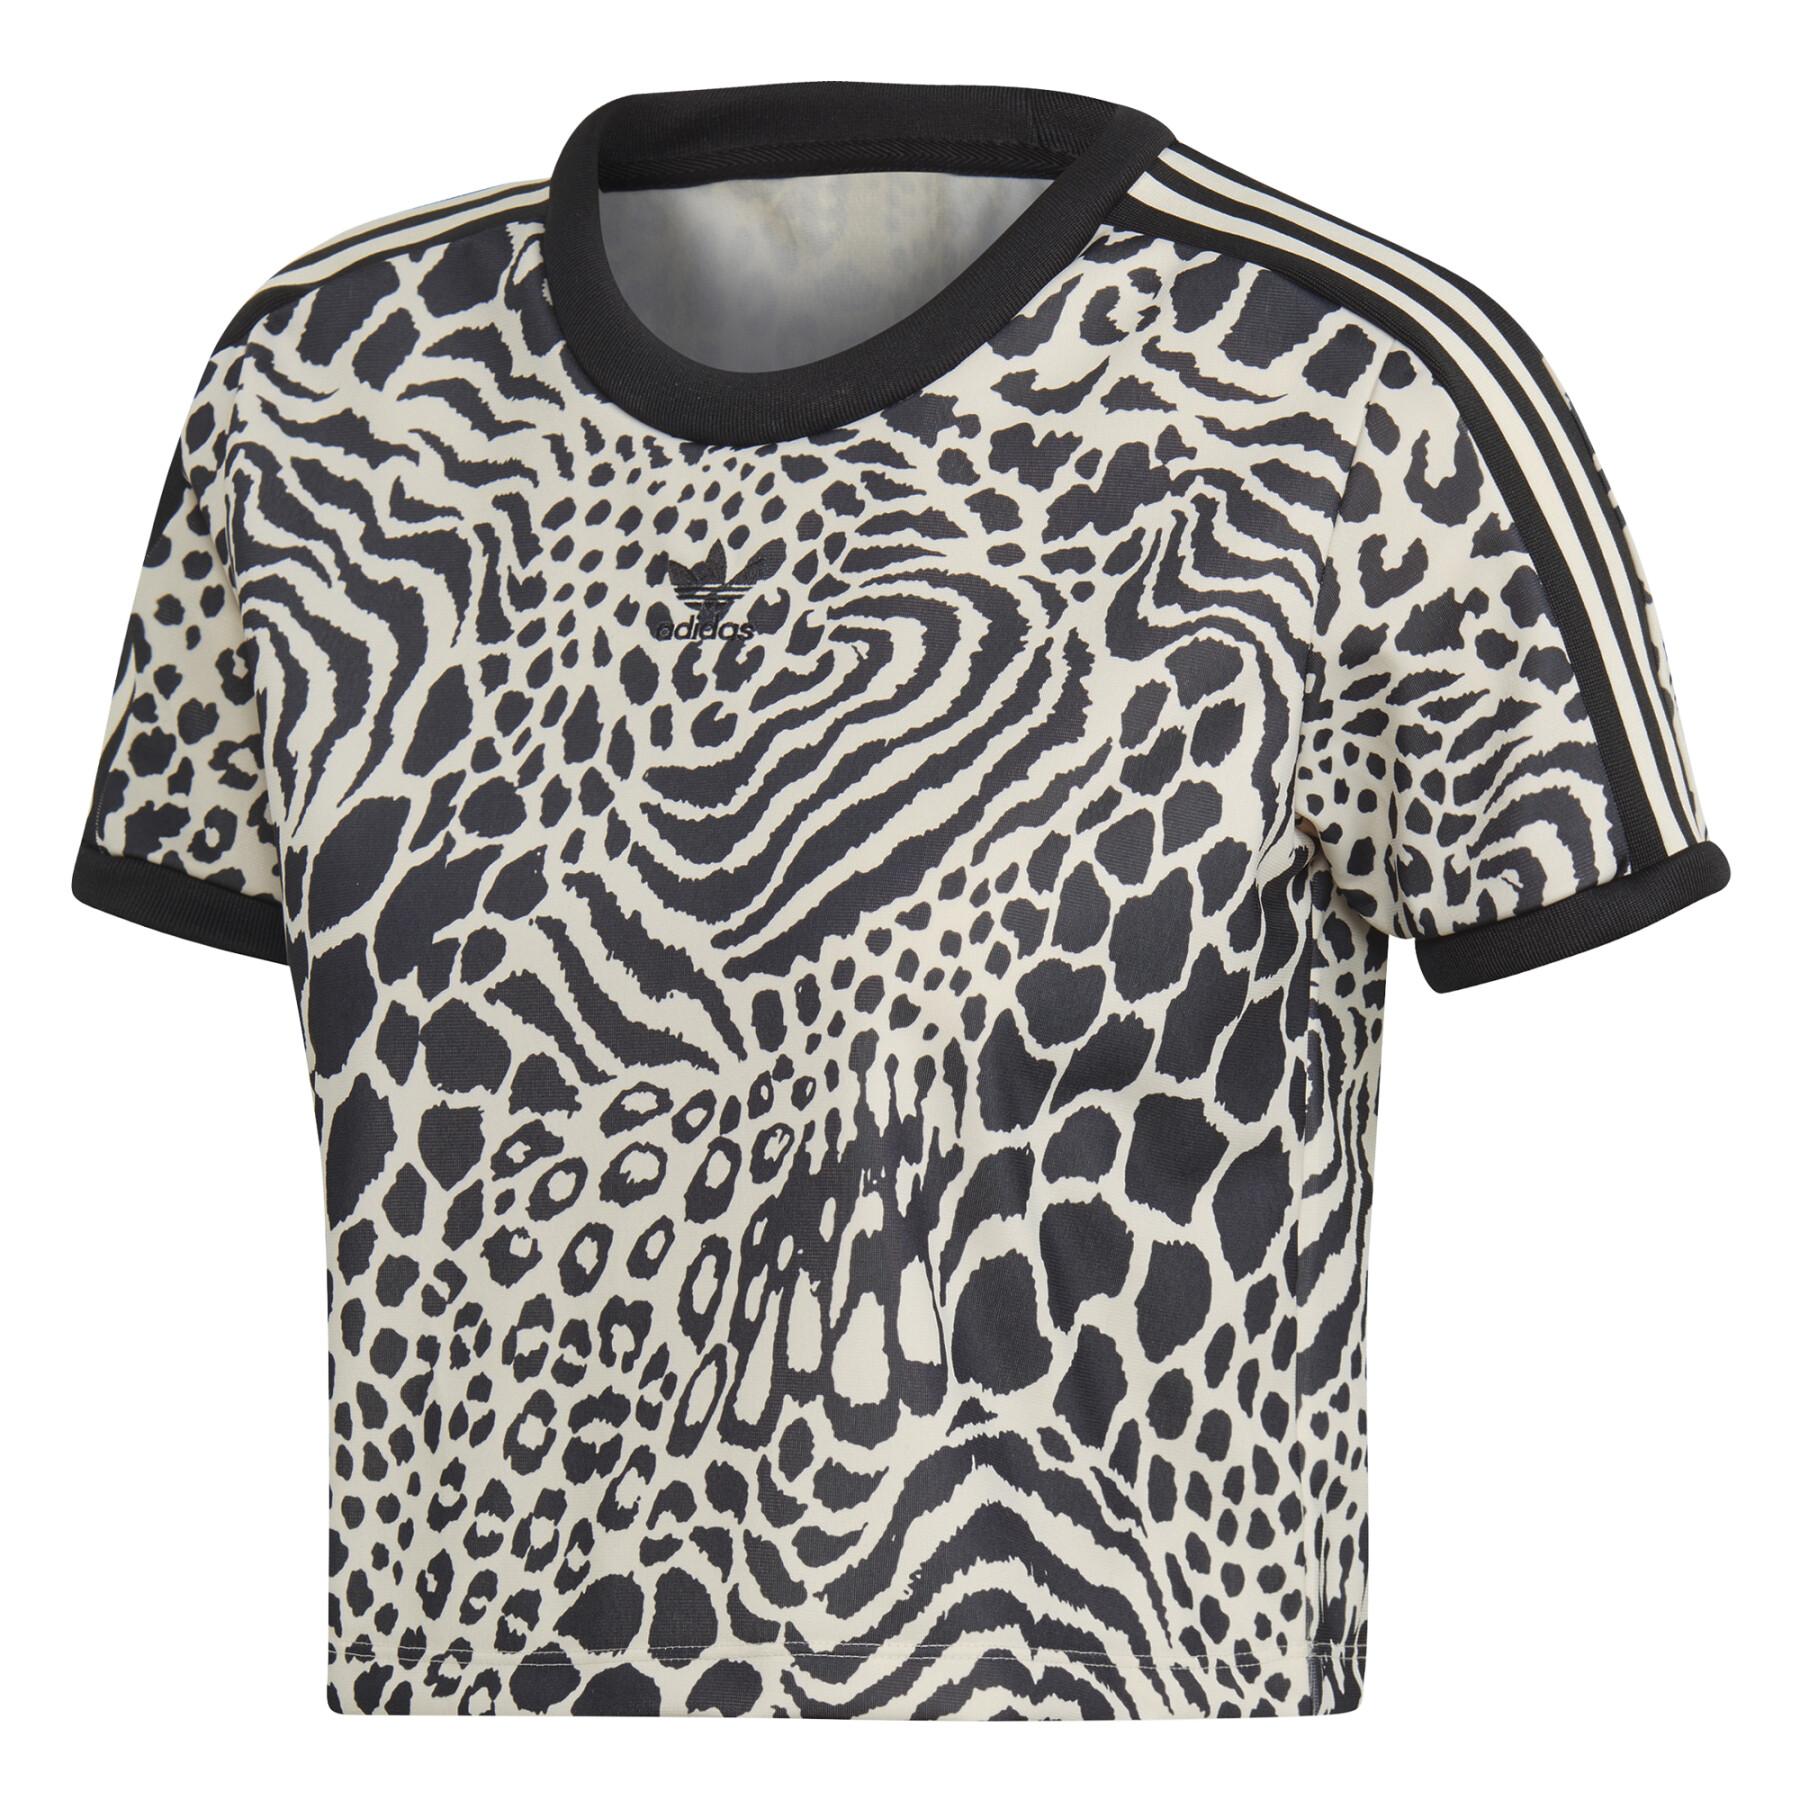 Damski crop top adidas Leopard